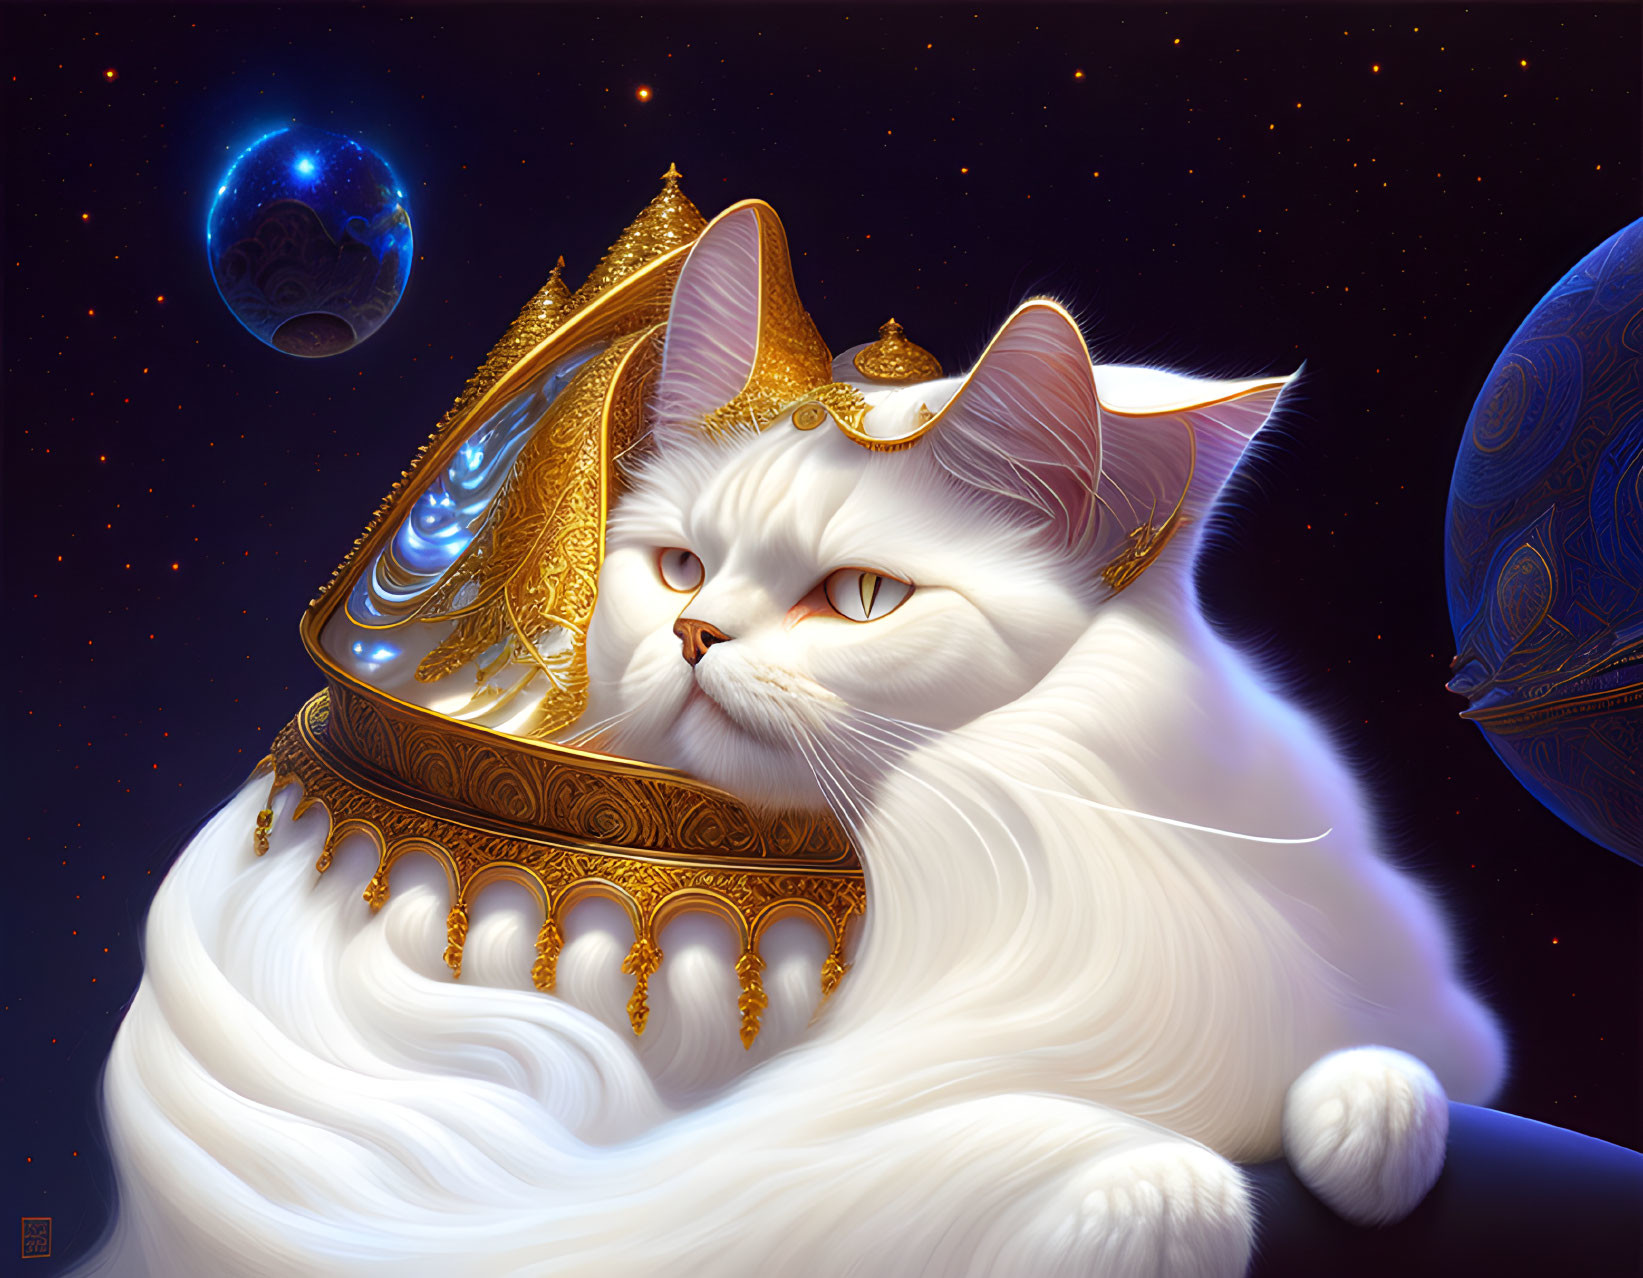 White Cat with Golden Headdress in Cosmic Setting